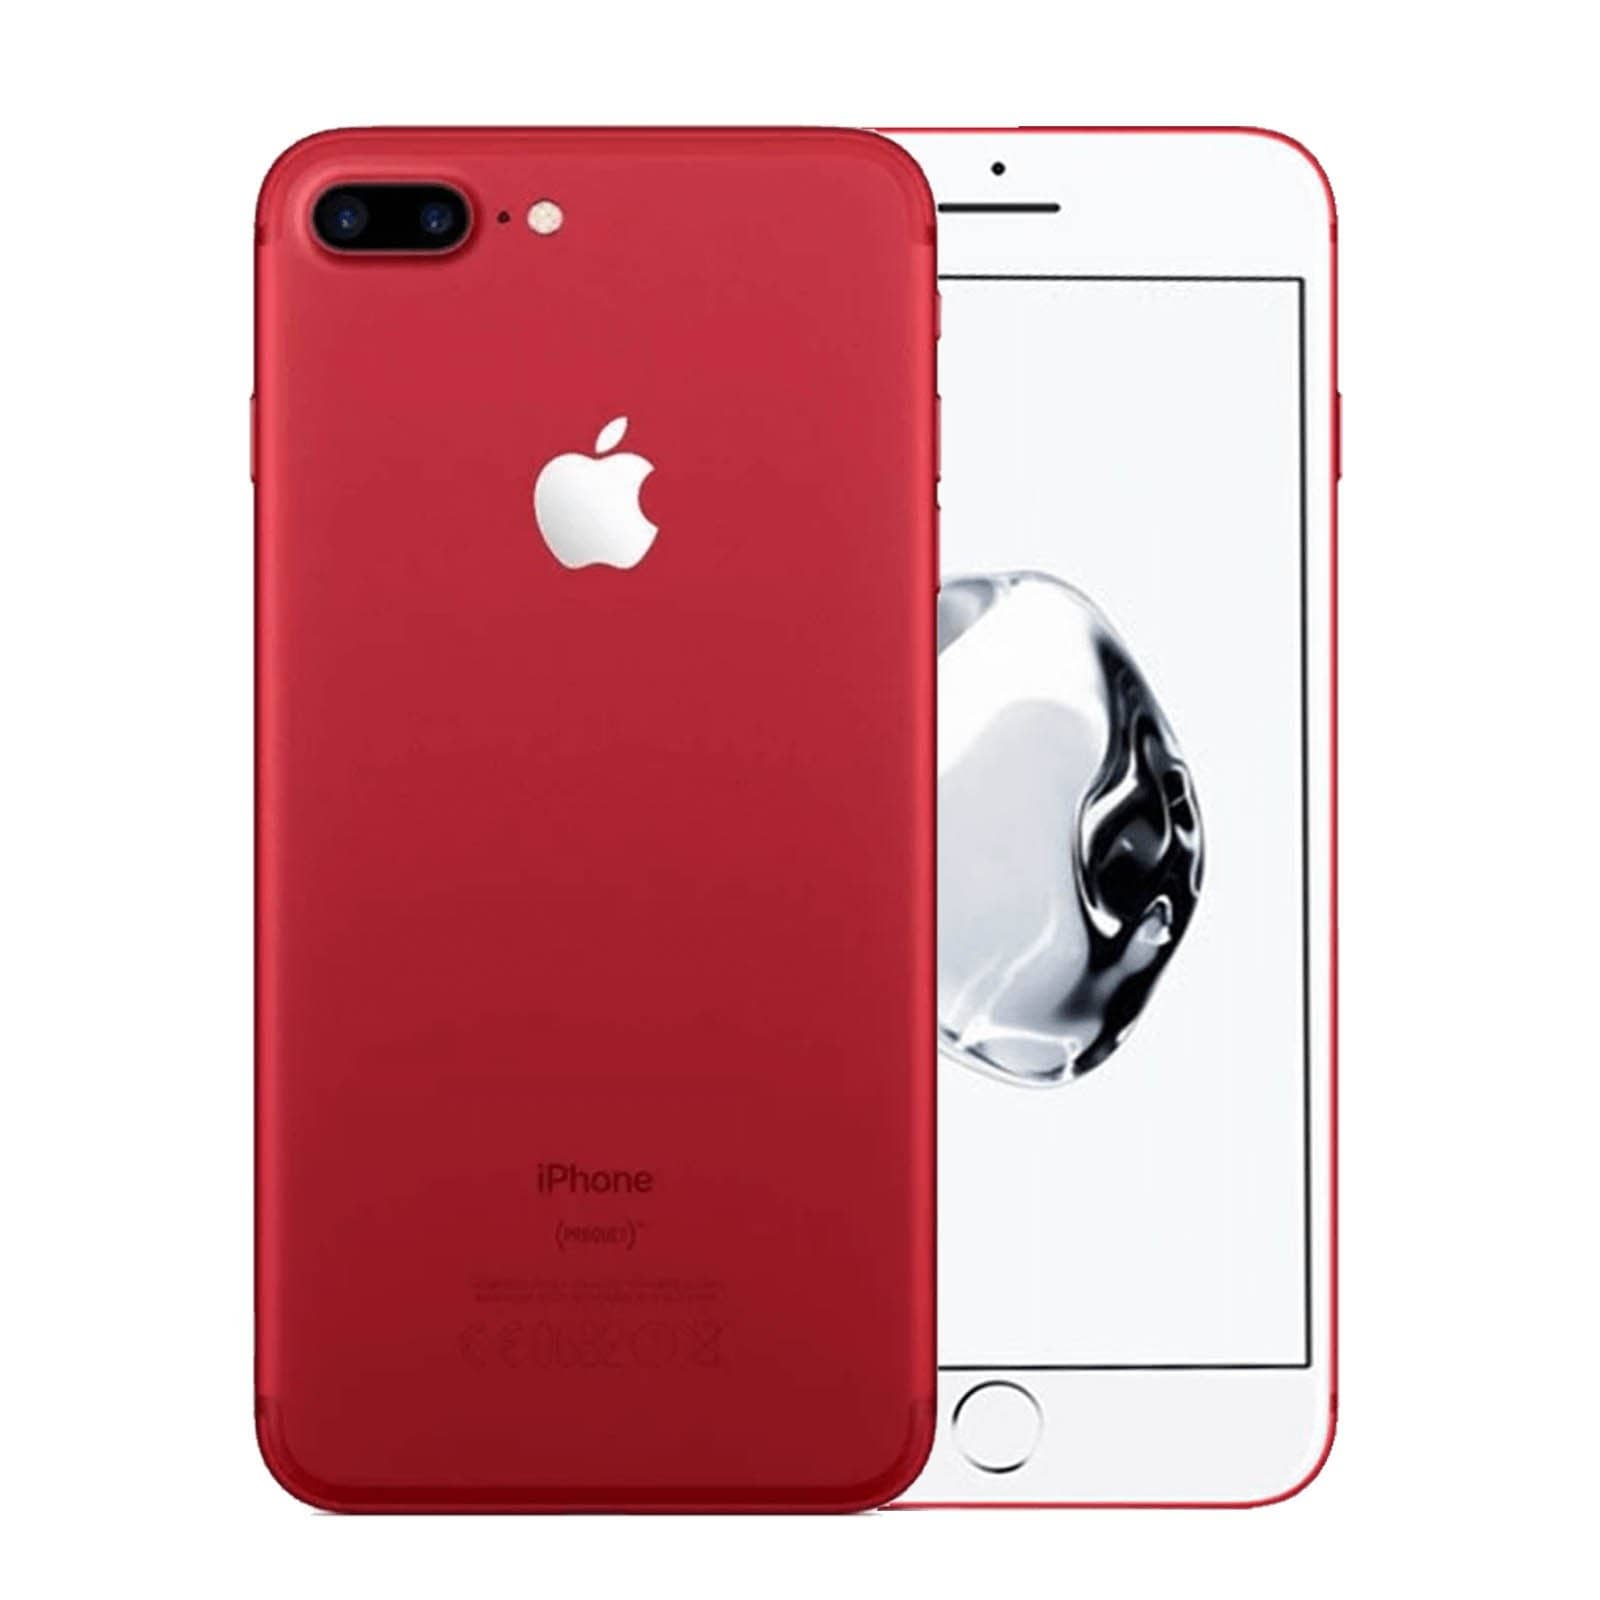 Apple iPhone 7 Plus 256GB Product Red Pristine - Unlocked 256GB Product Red Pristine